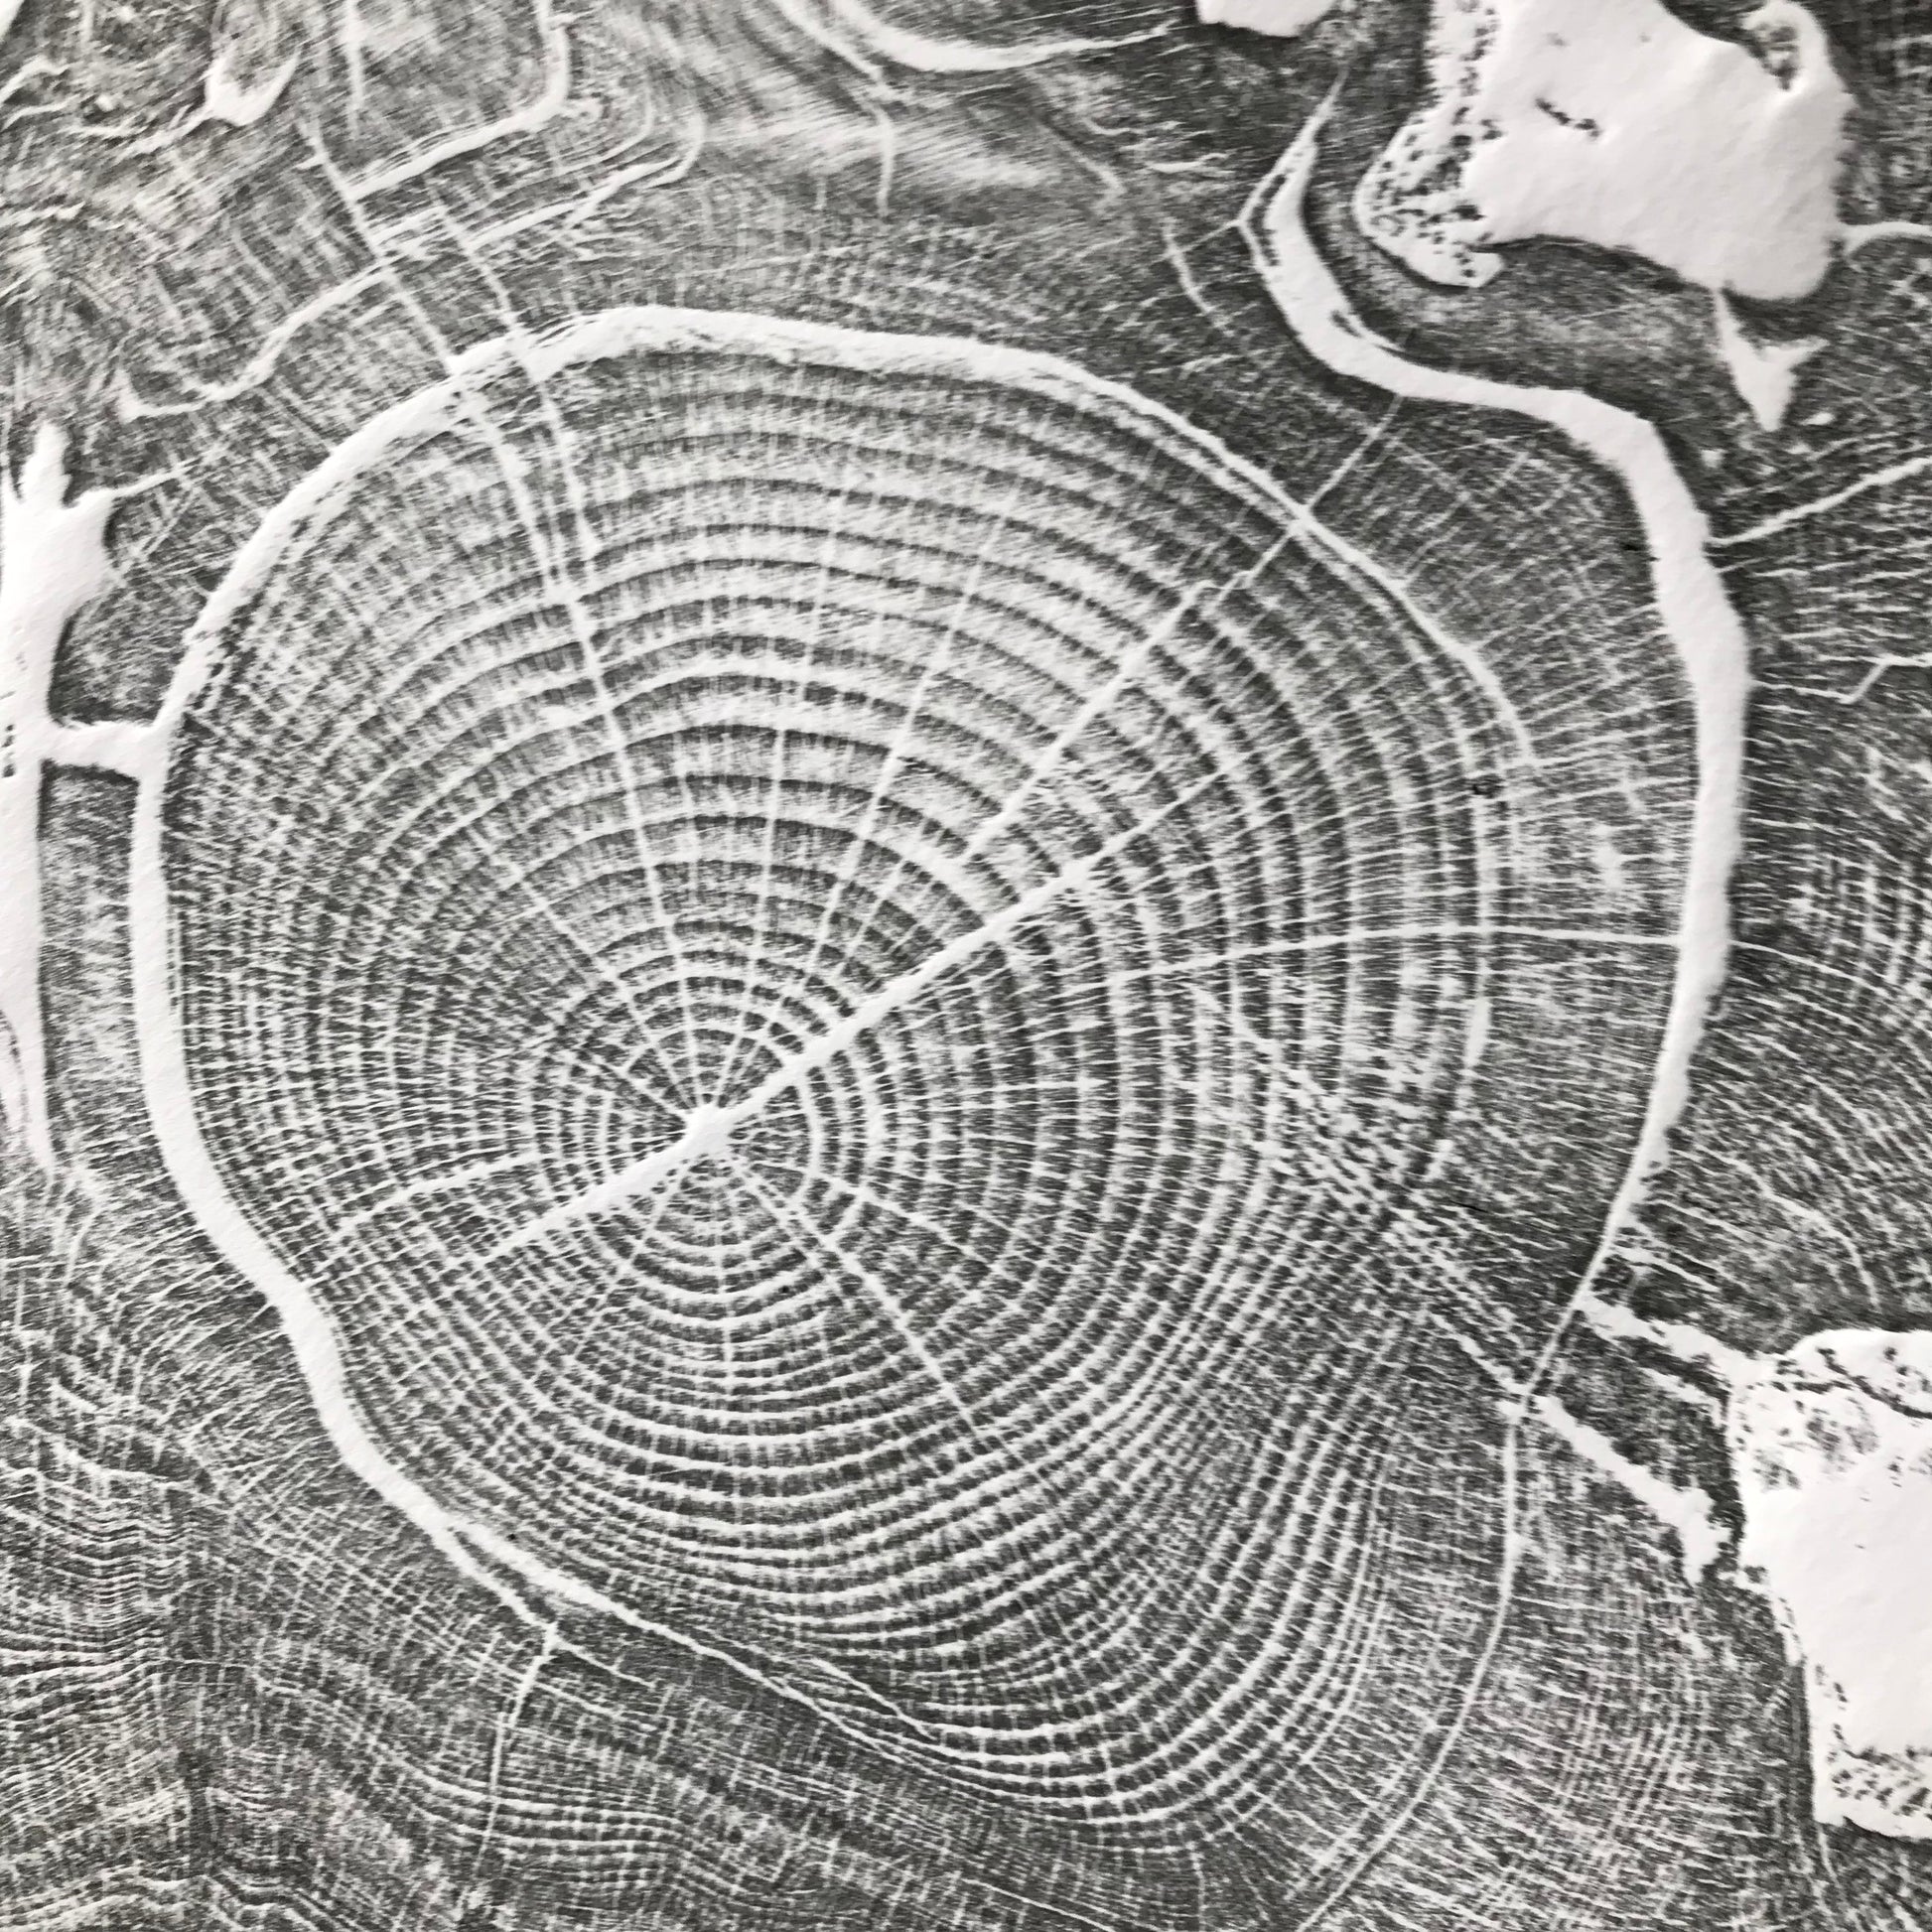 Yew tree round relief print art